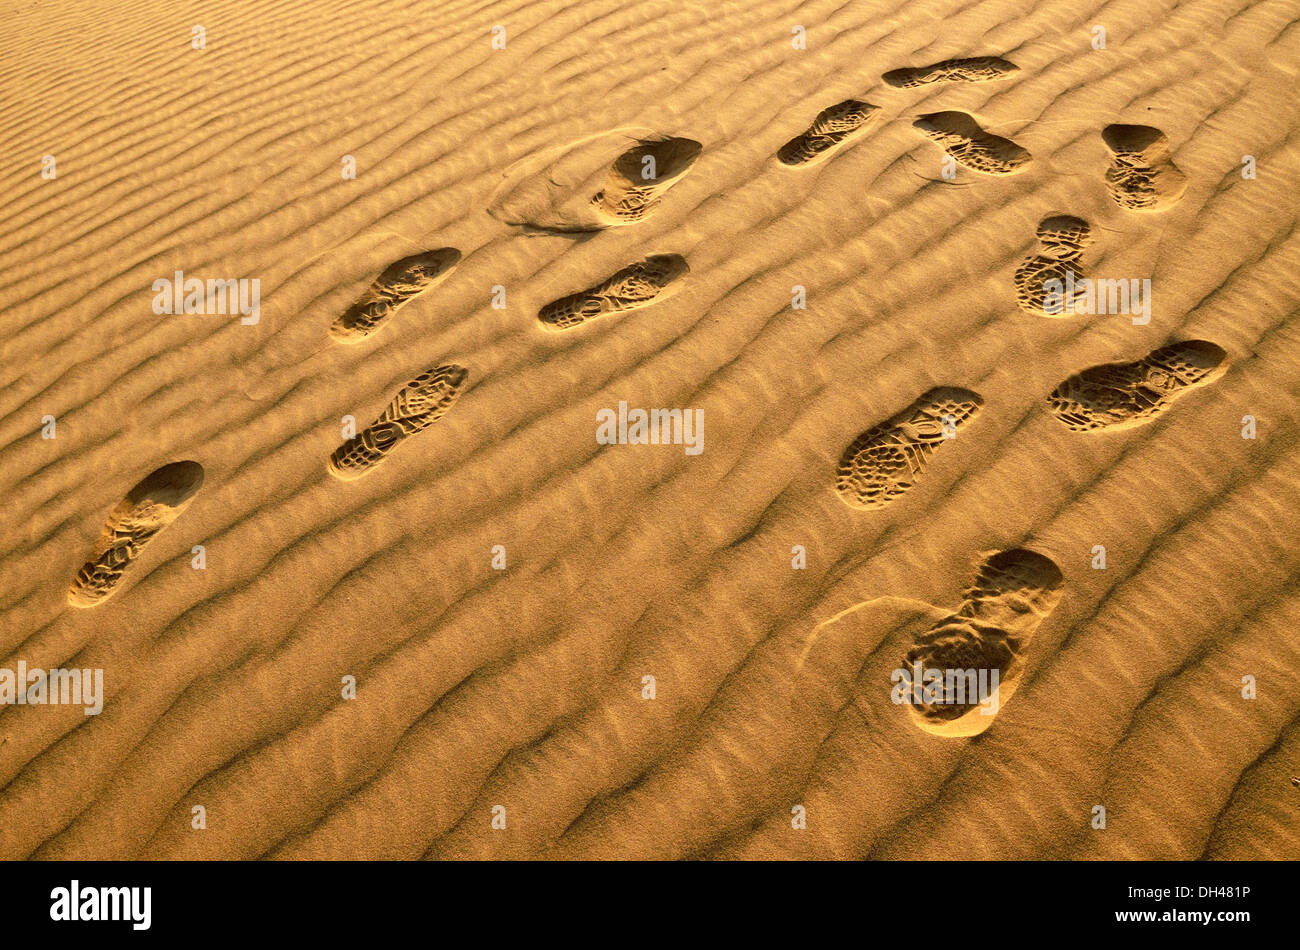 shoe foot prints on desert sand dunes Rajasthan India Asia Stock Photo